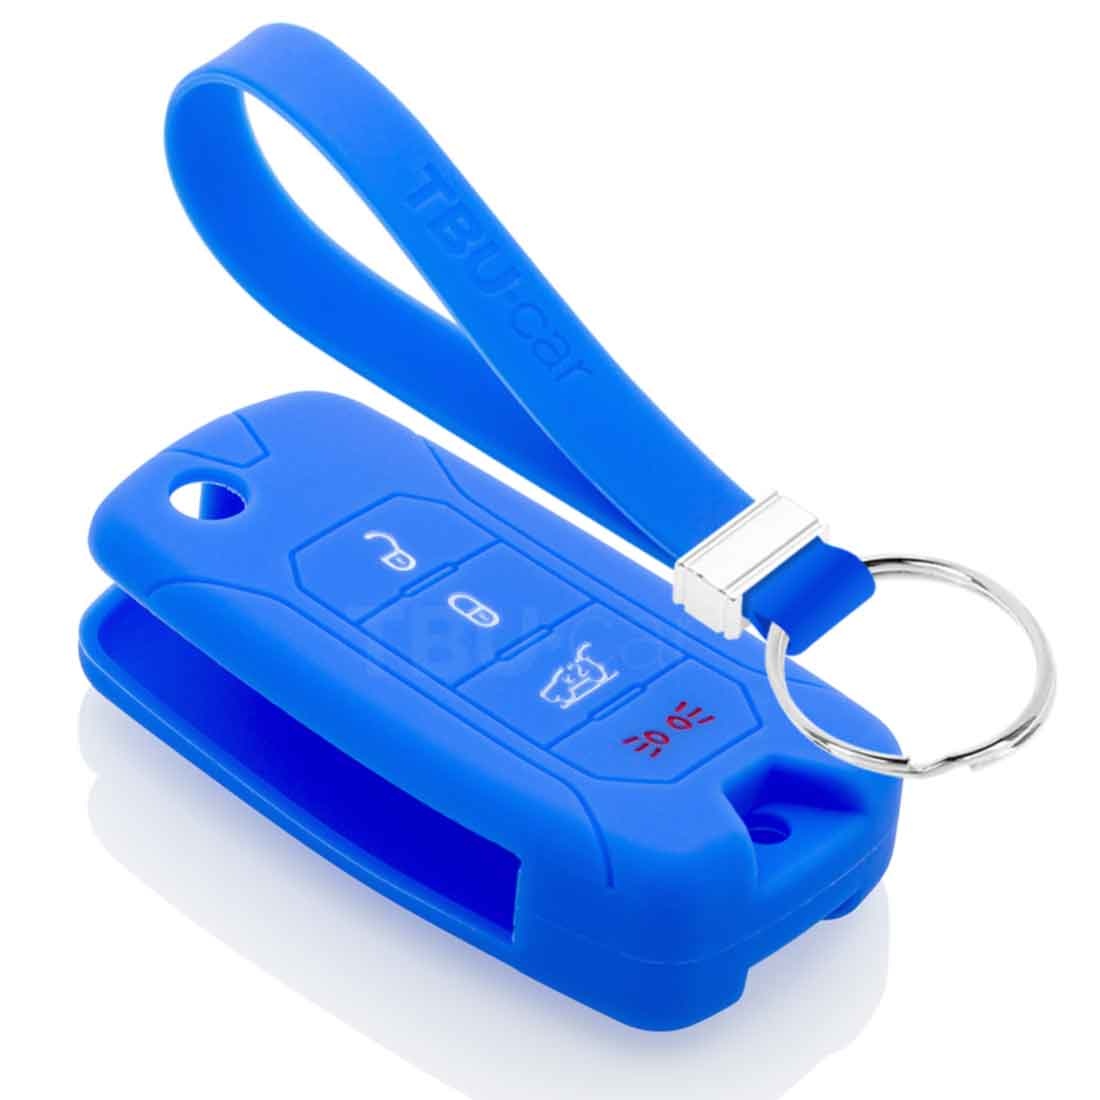 TBU car TBU car Autoschlüssel Hülle kompatibel mit Jeep 4 Tasten - Schutzhülle aus Silikon - Auto Schlüsselhülle Cover in Blau